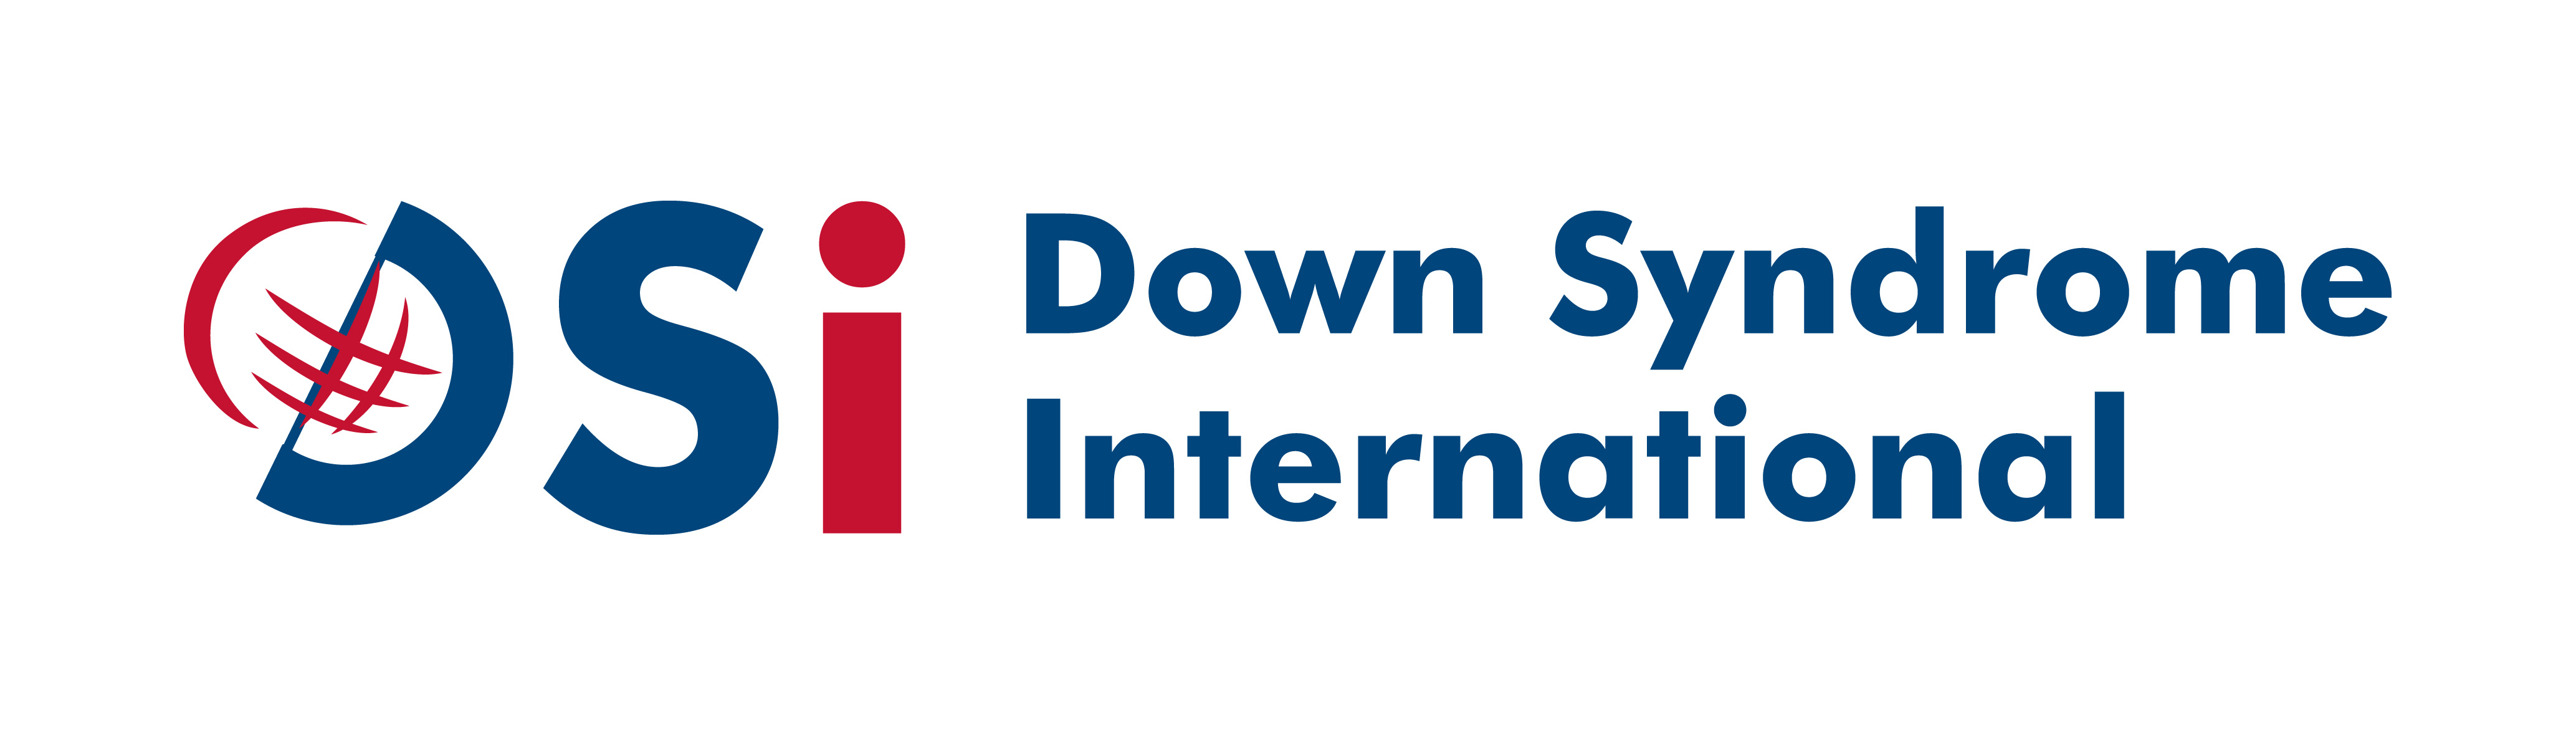 Down Syndrome International logo